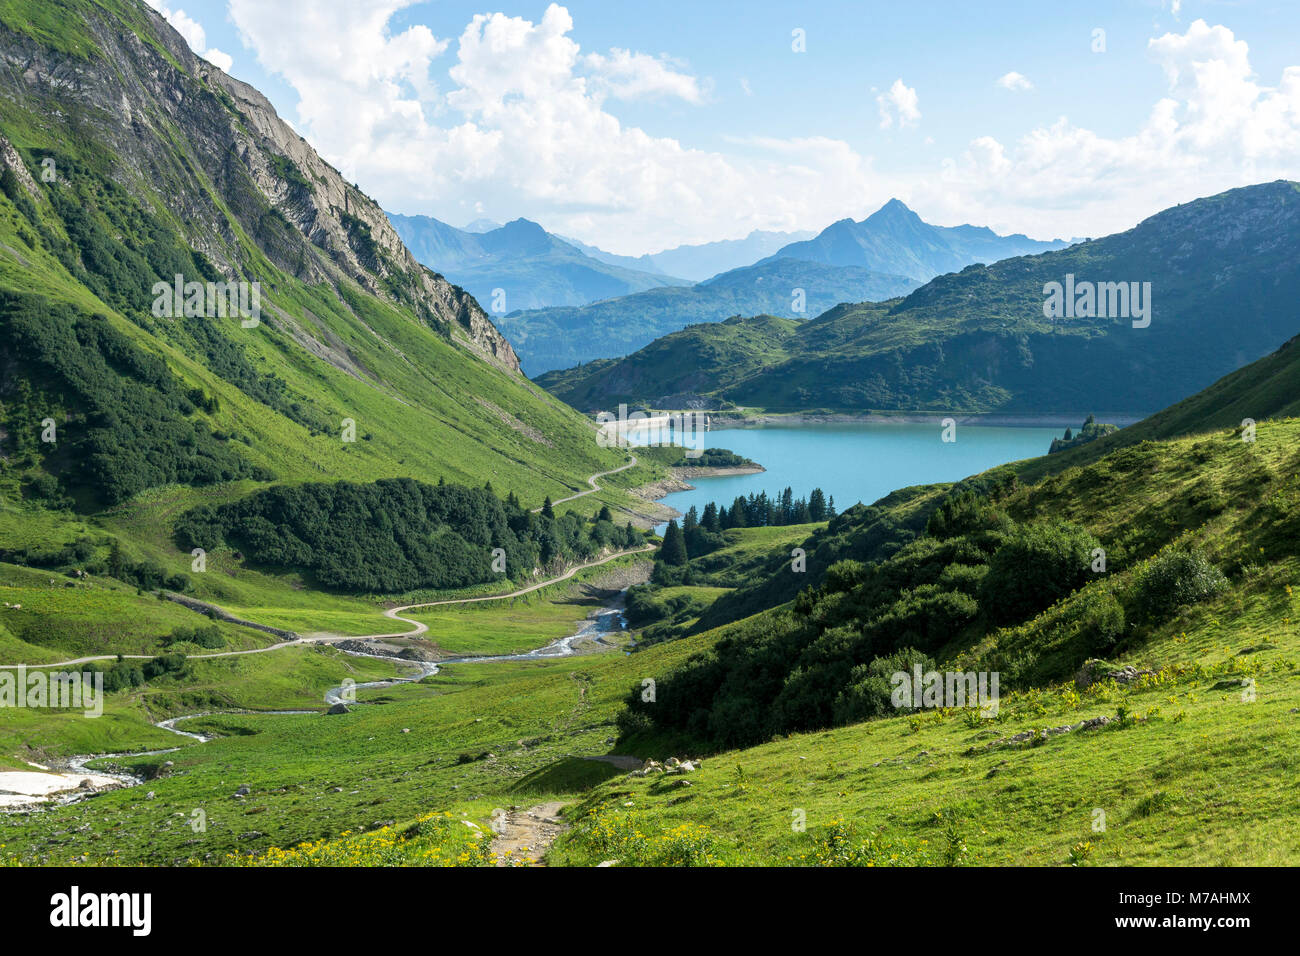 Austria, Vorarlberg, Lechquellen Mountains, Dalaas, view from the Spullersee in the Lechquellen Mountains Stock Photo